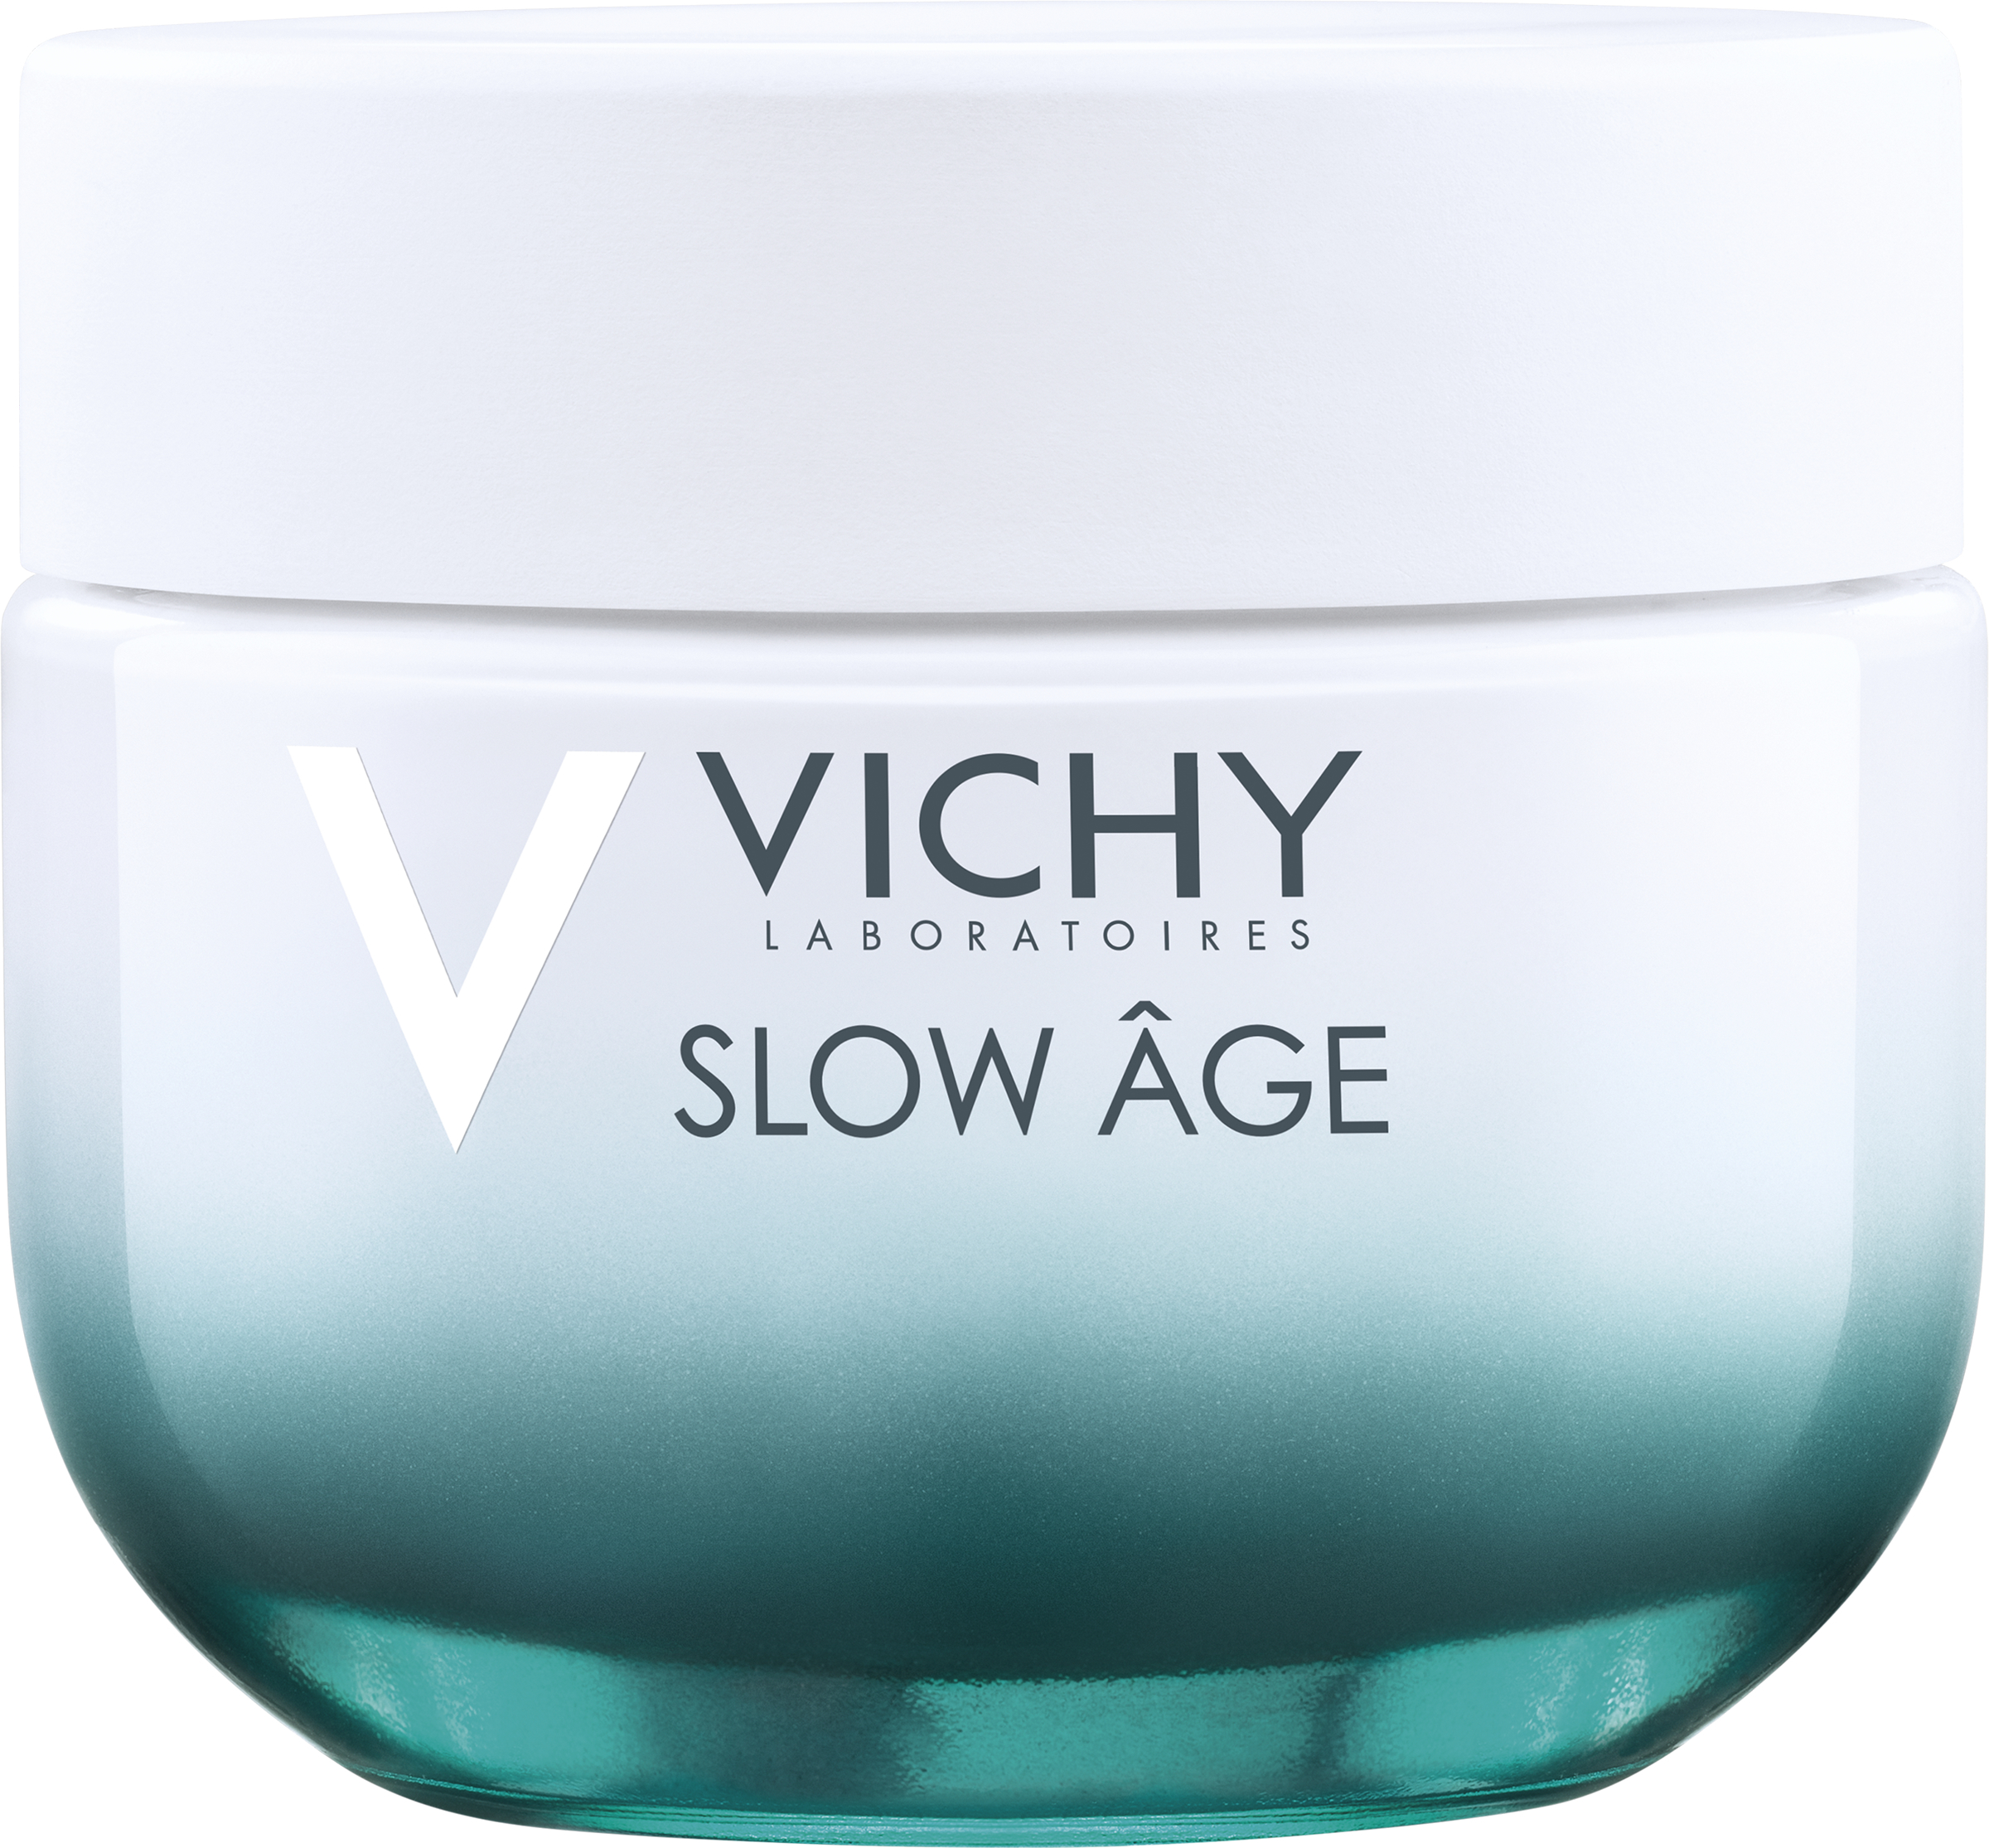 Vichy Slow Age SPF30 Dry Skin 50 ml